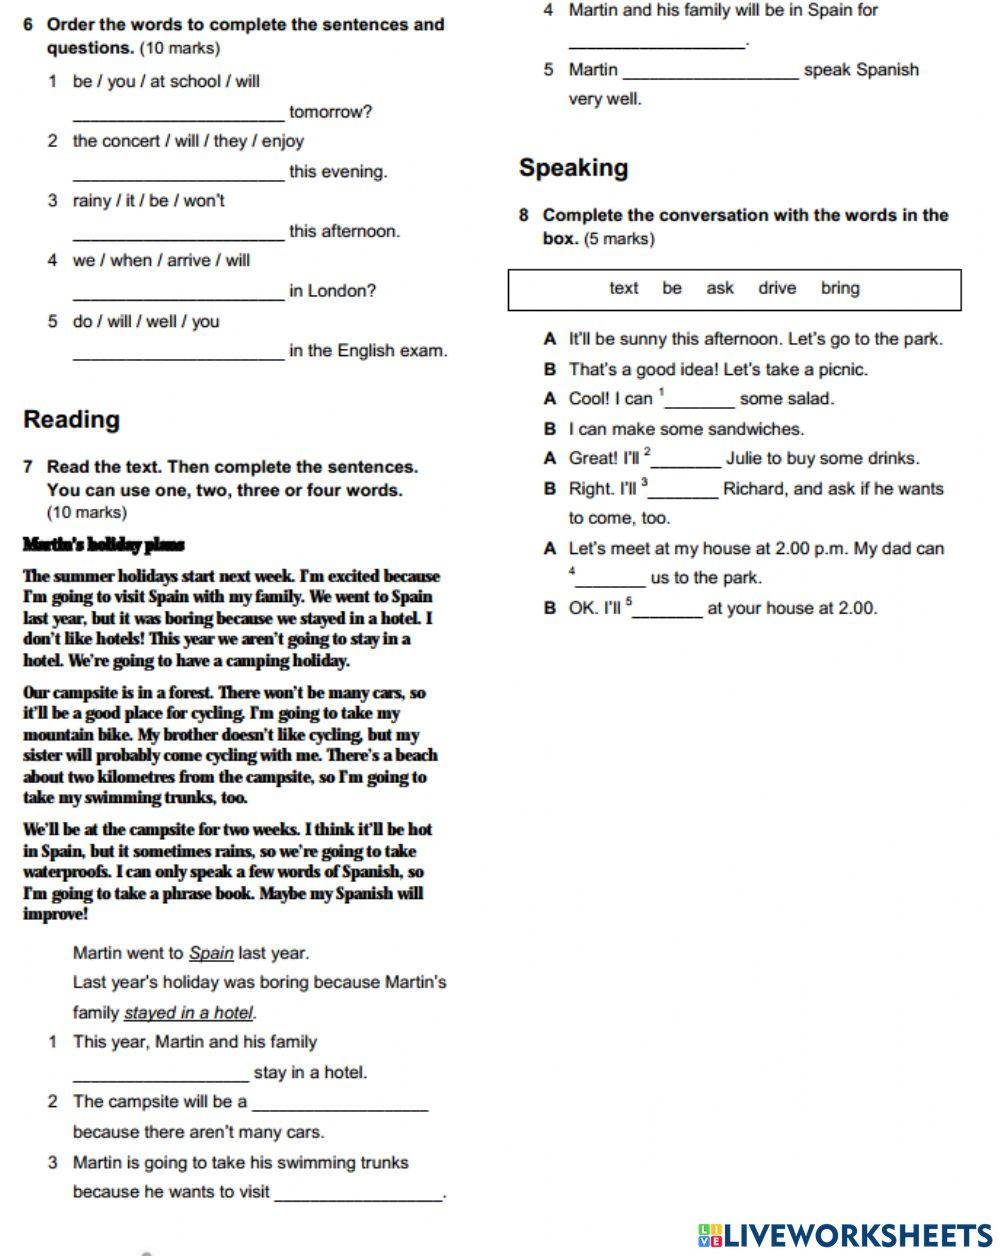 English plus 1 Unit 8(part 2) interactive worksheet | Live Worksheets